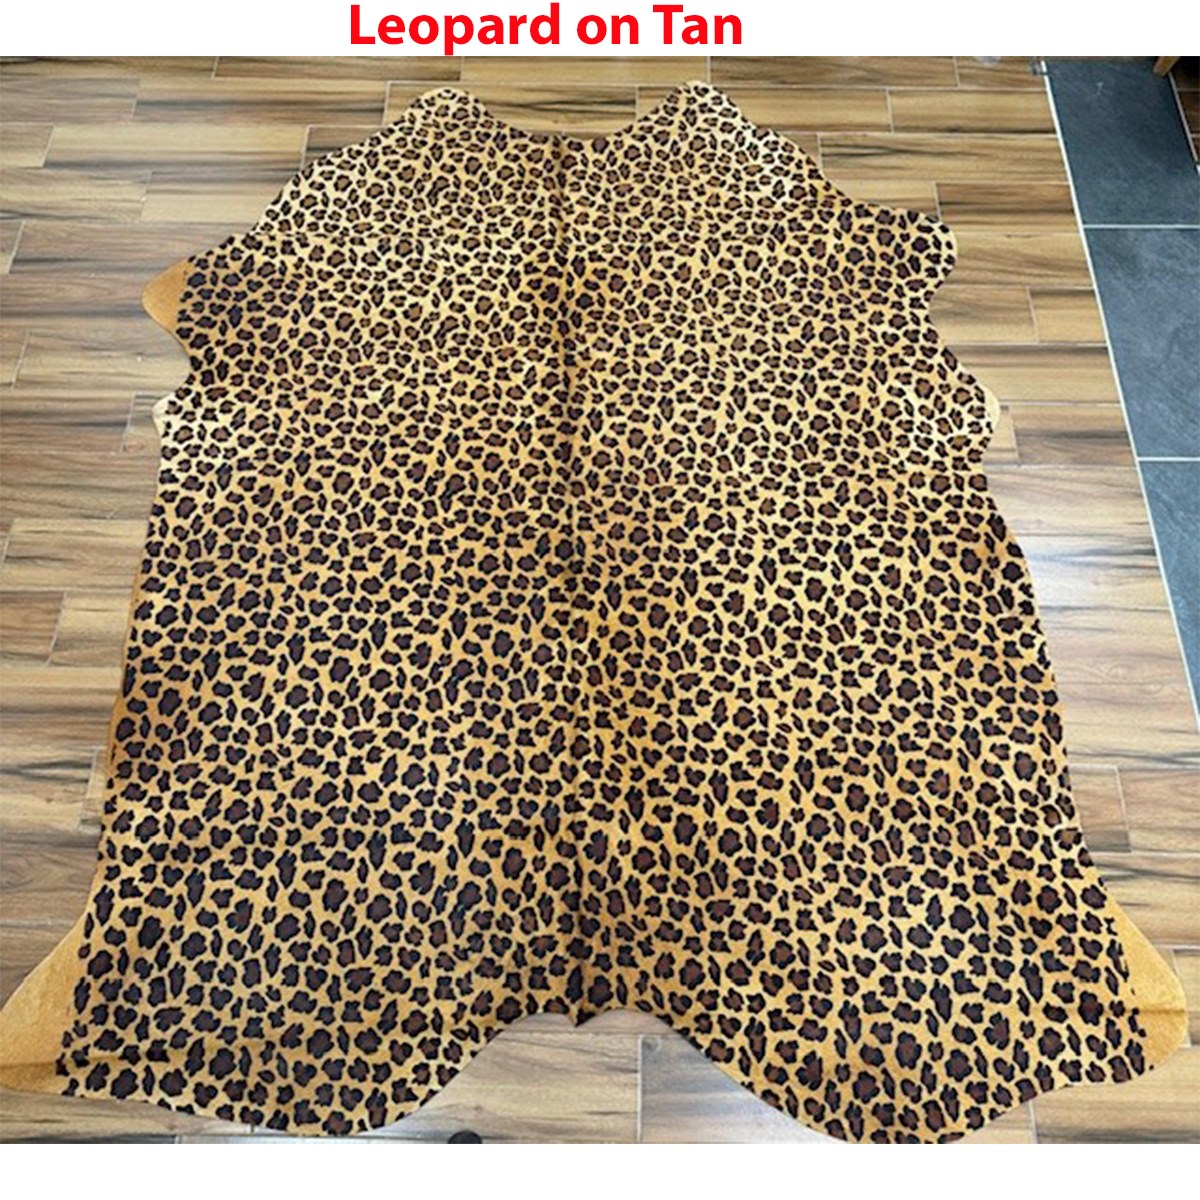 Leopard on Tan